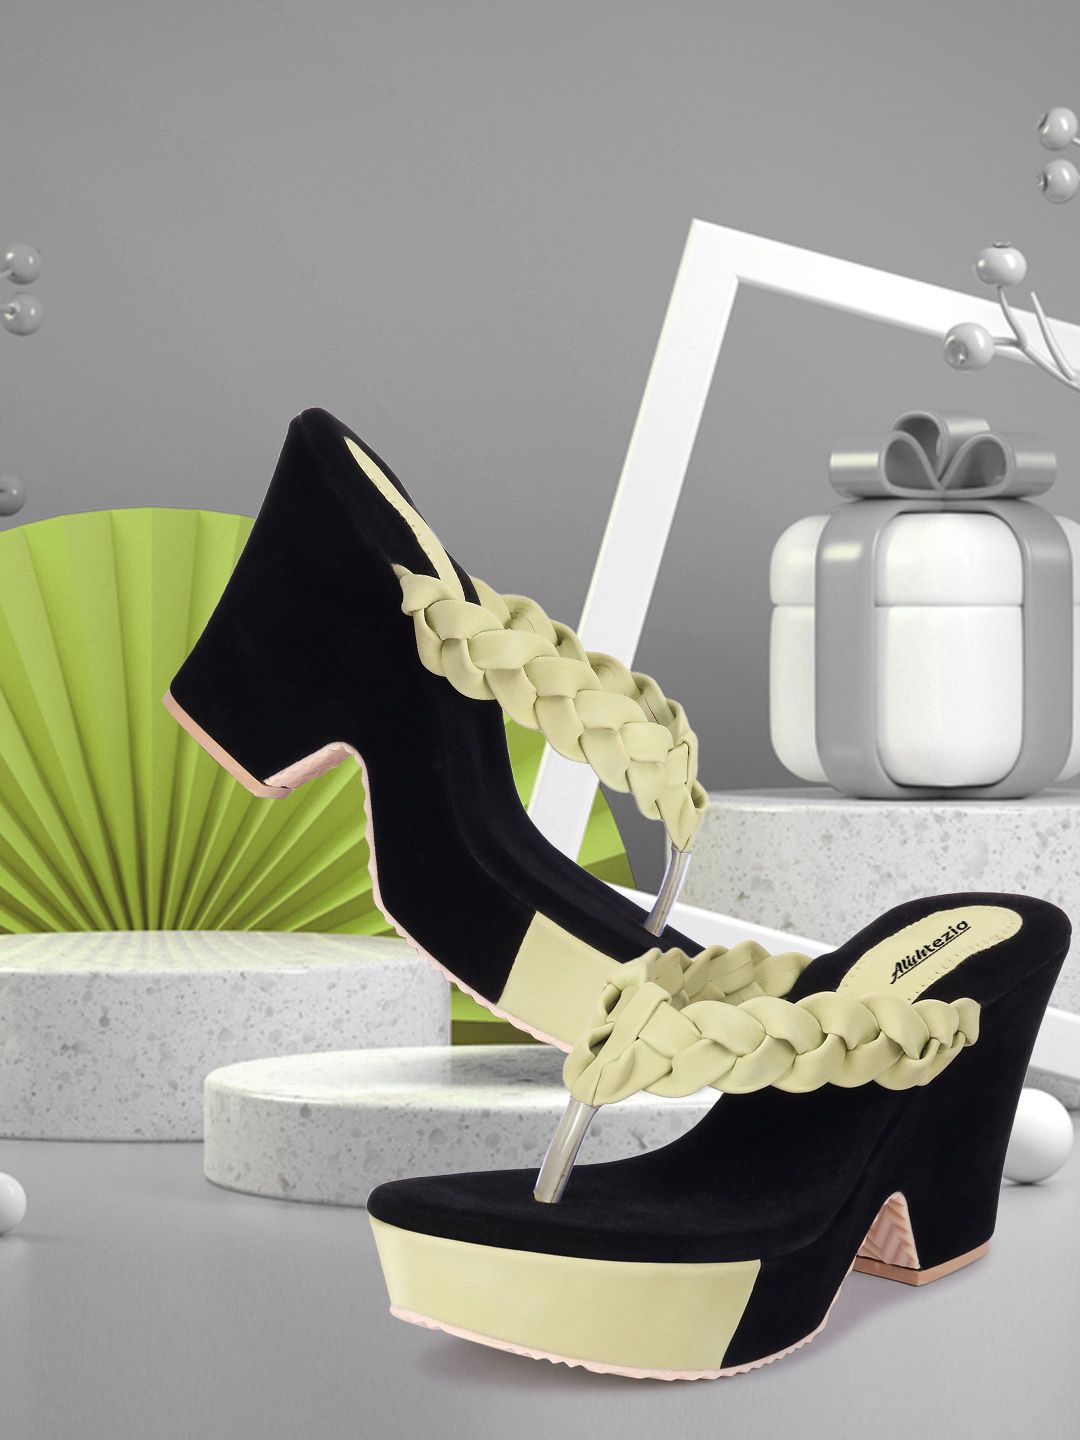 Alishtezia Lime Green & Black Woven Design Suede Wedge Sandals Price in India